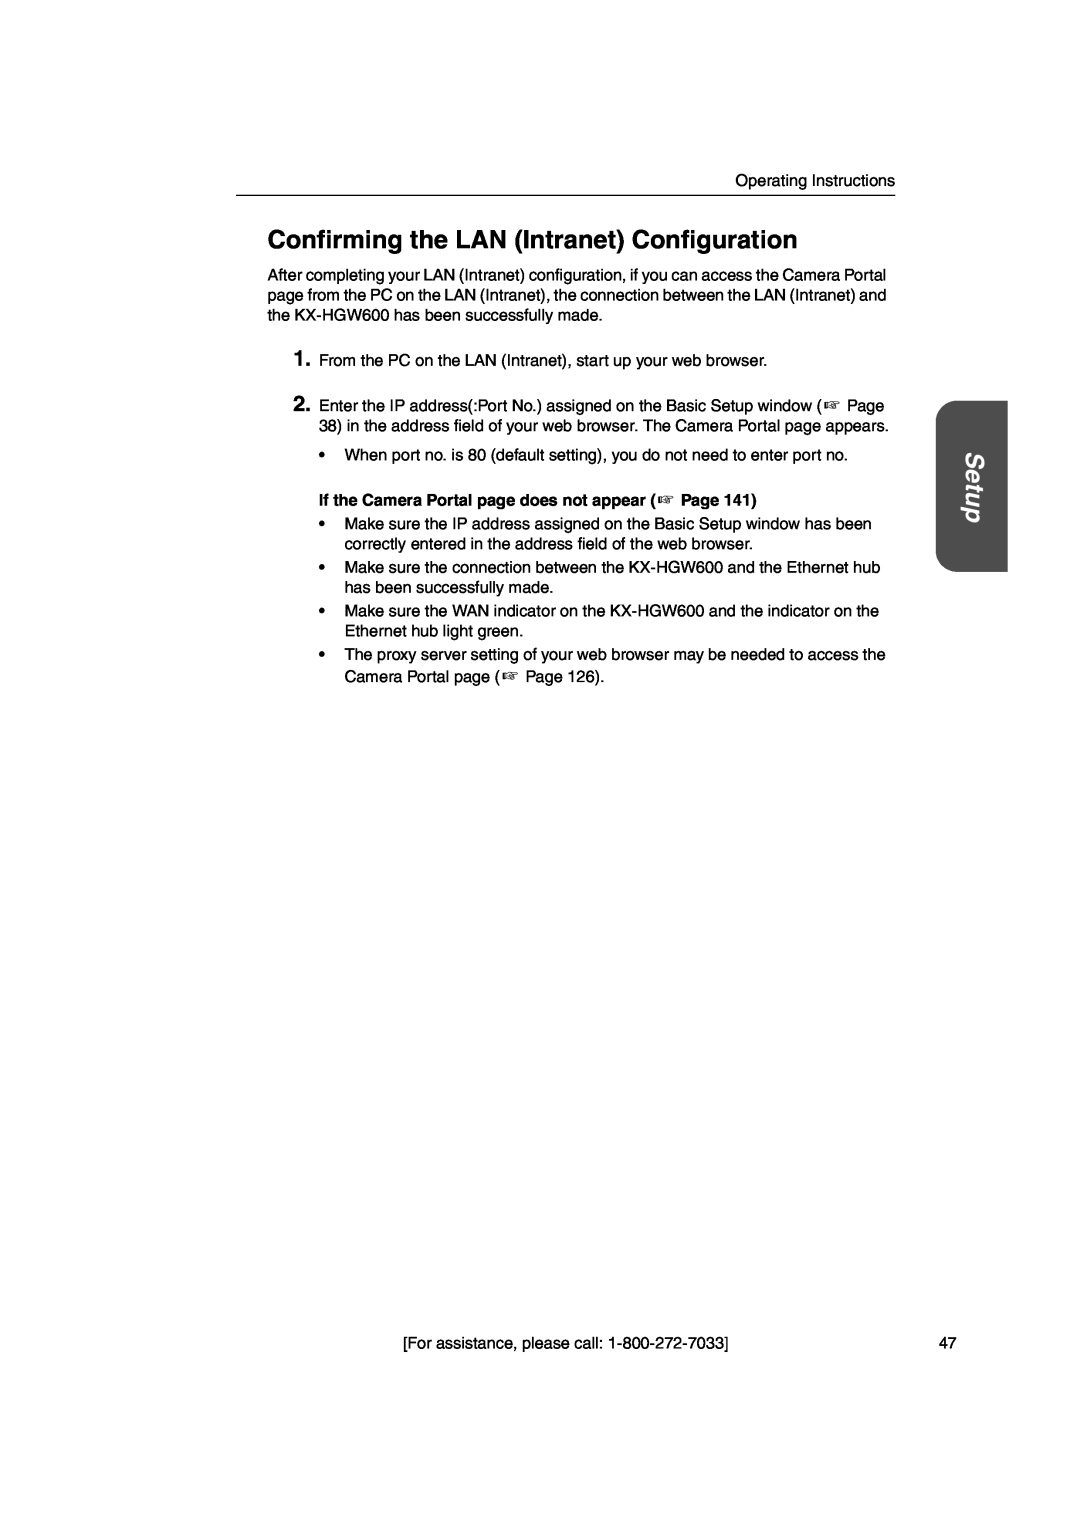 Panasonic KX-HGW600 manual Confirming the LAN Intranet Configuration, Setup 